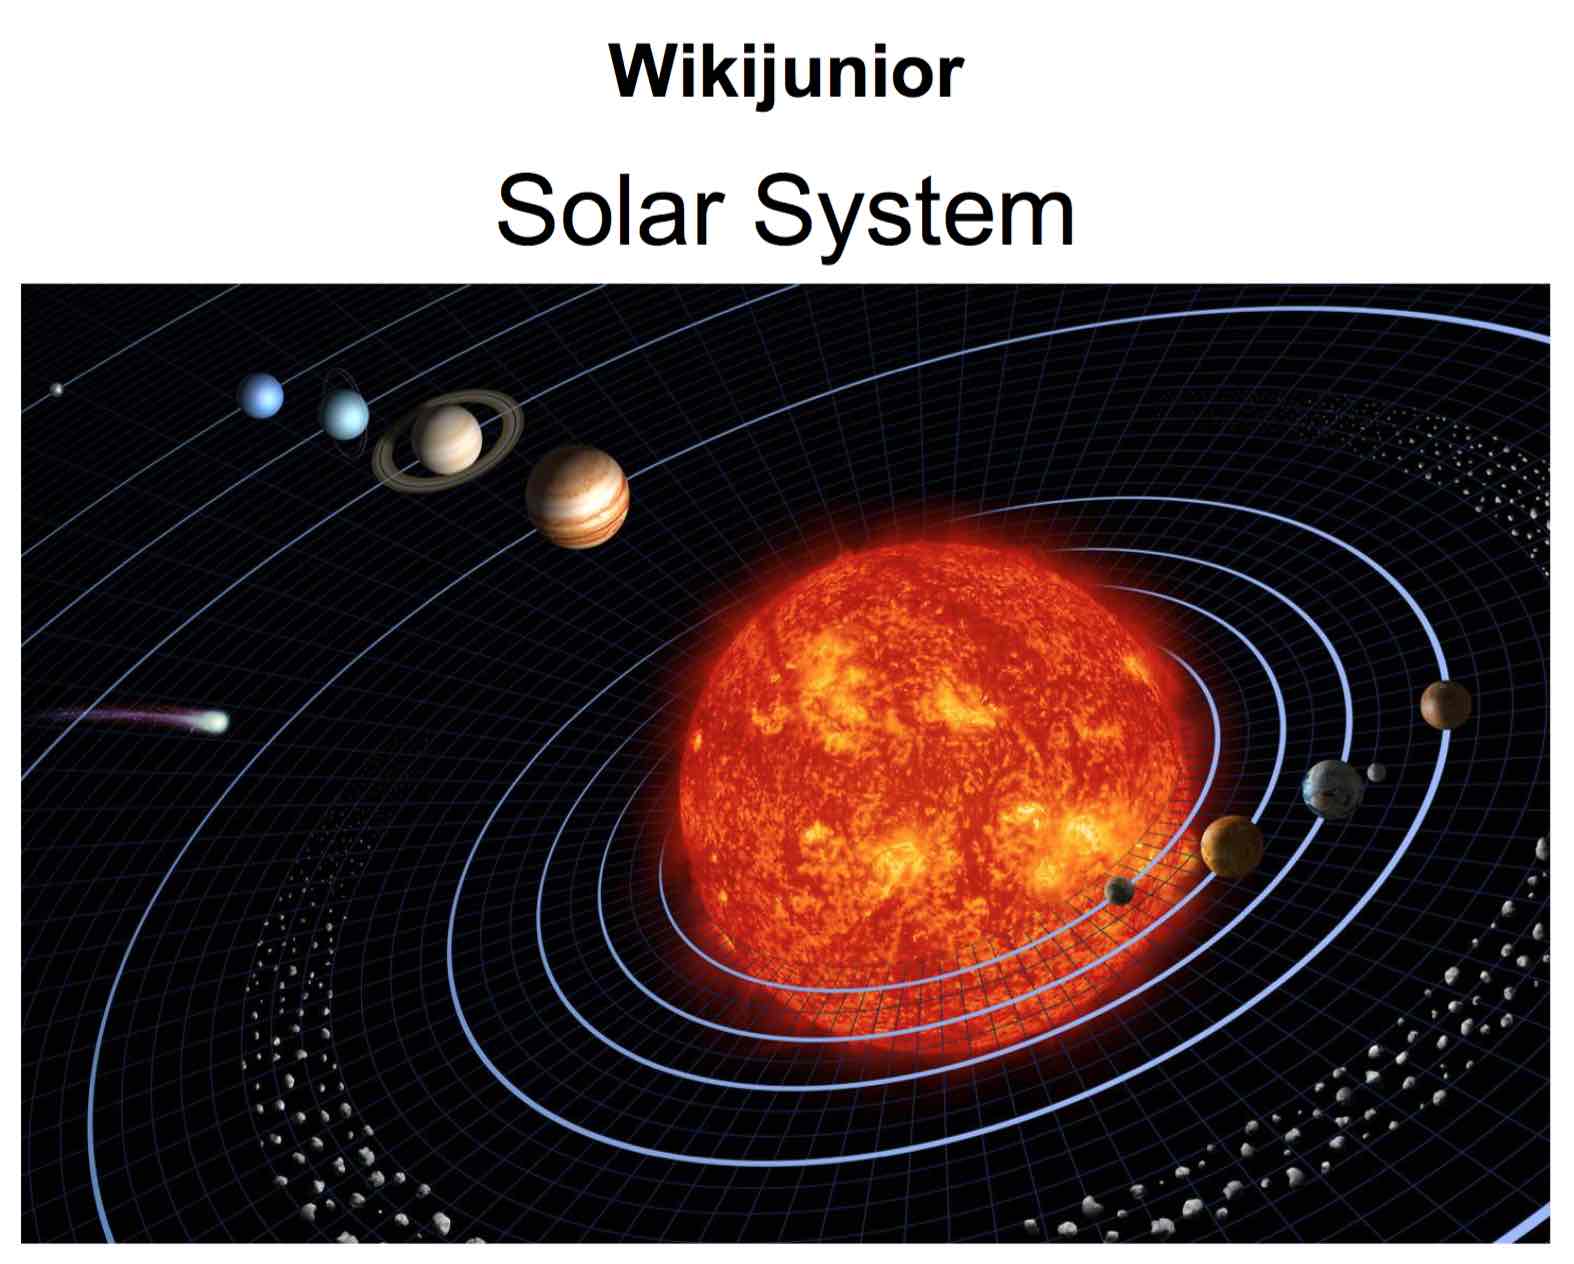 wikijunior solar system ebook download